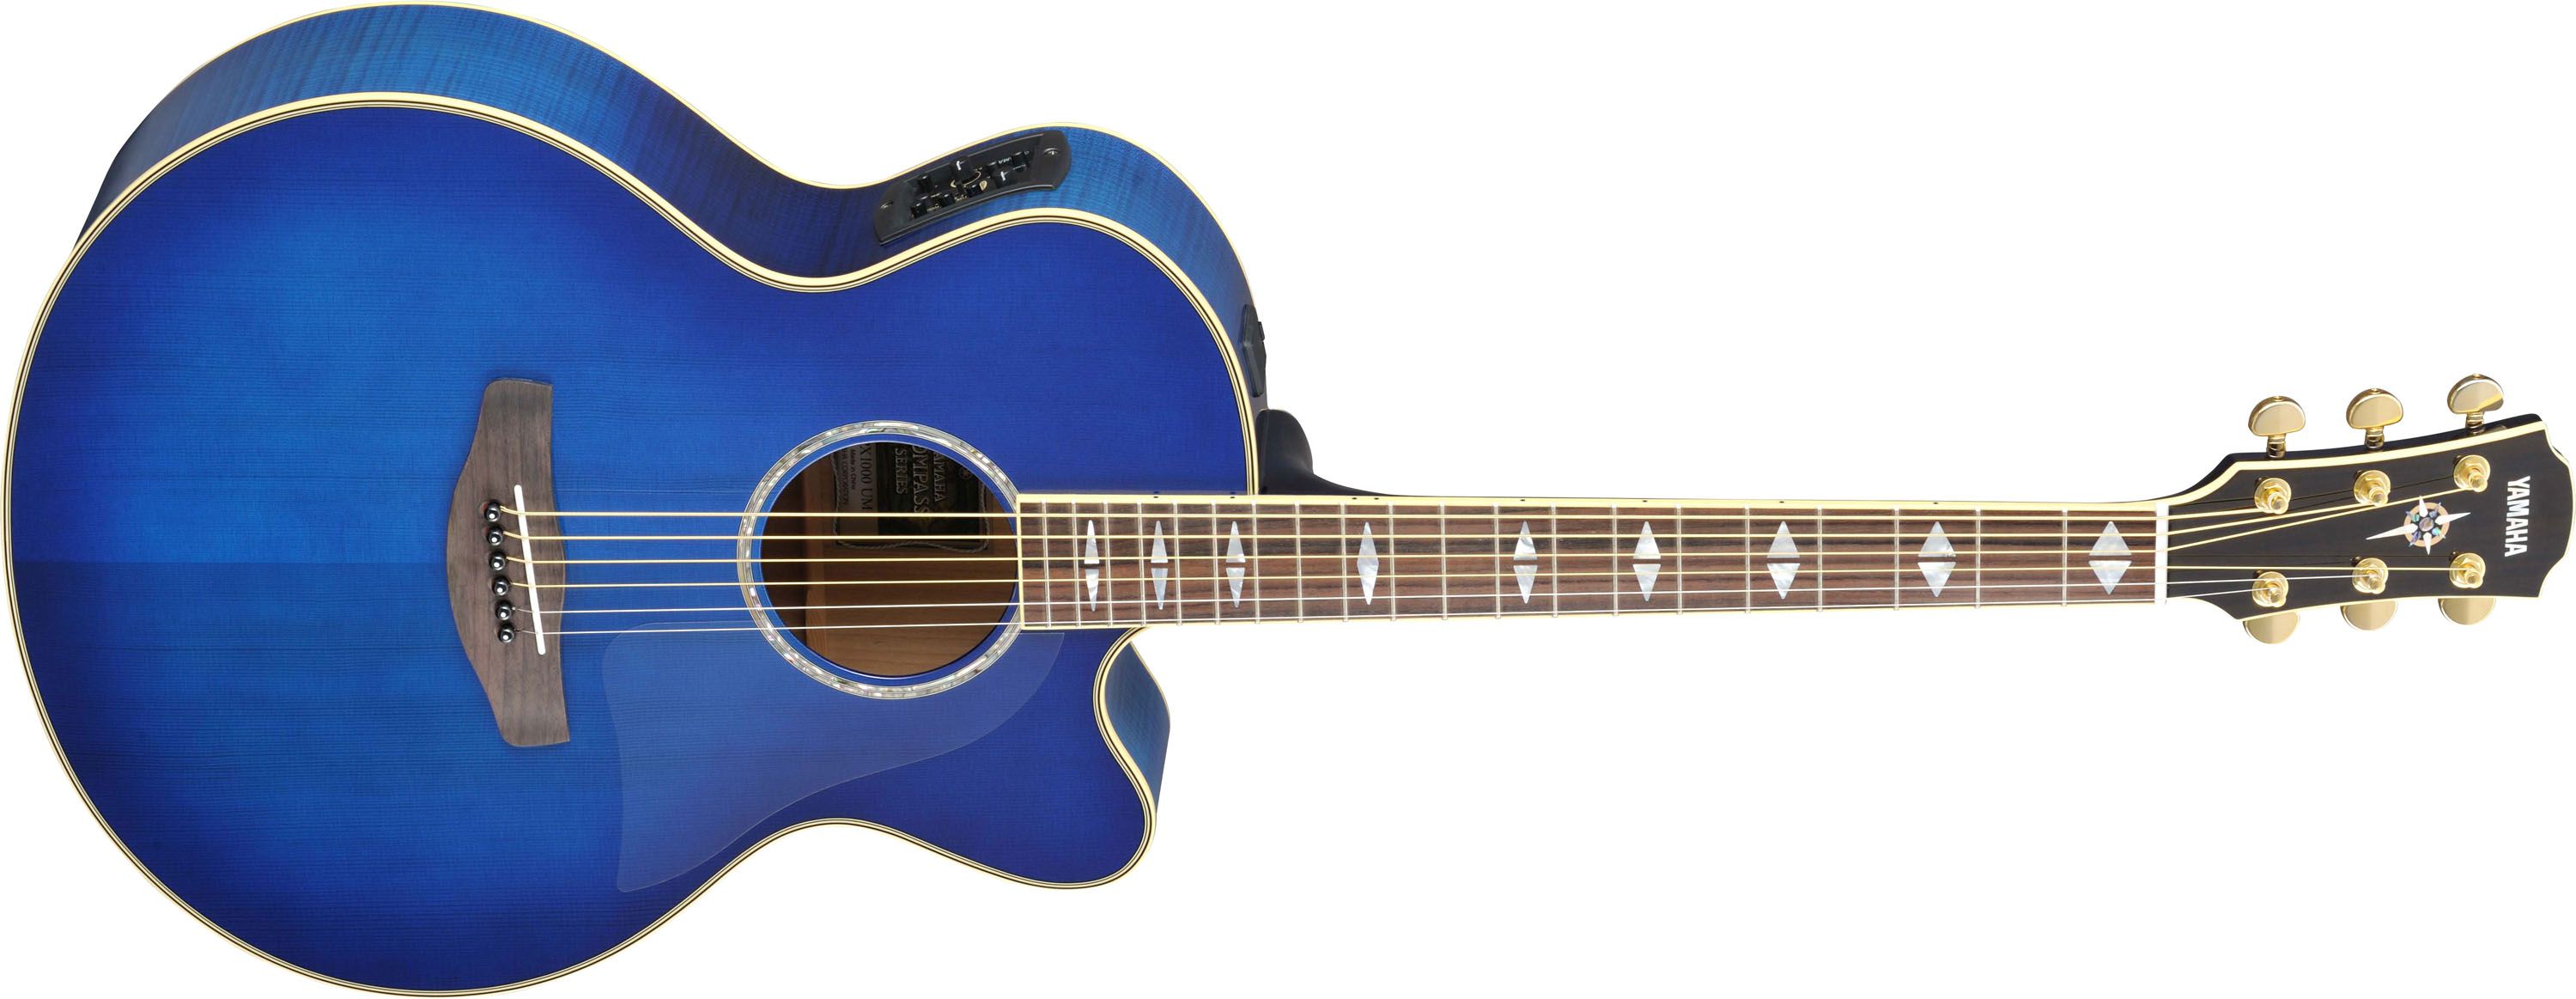 Yamaha Cpx1000 - Ultramarine - Electro acoustic guitar - Variation 1